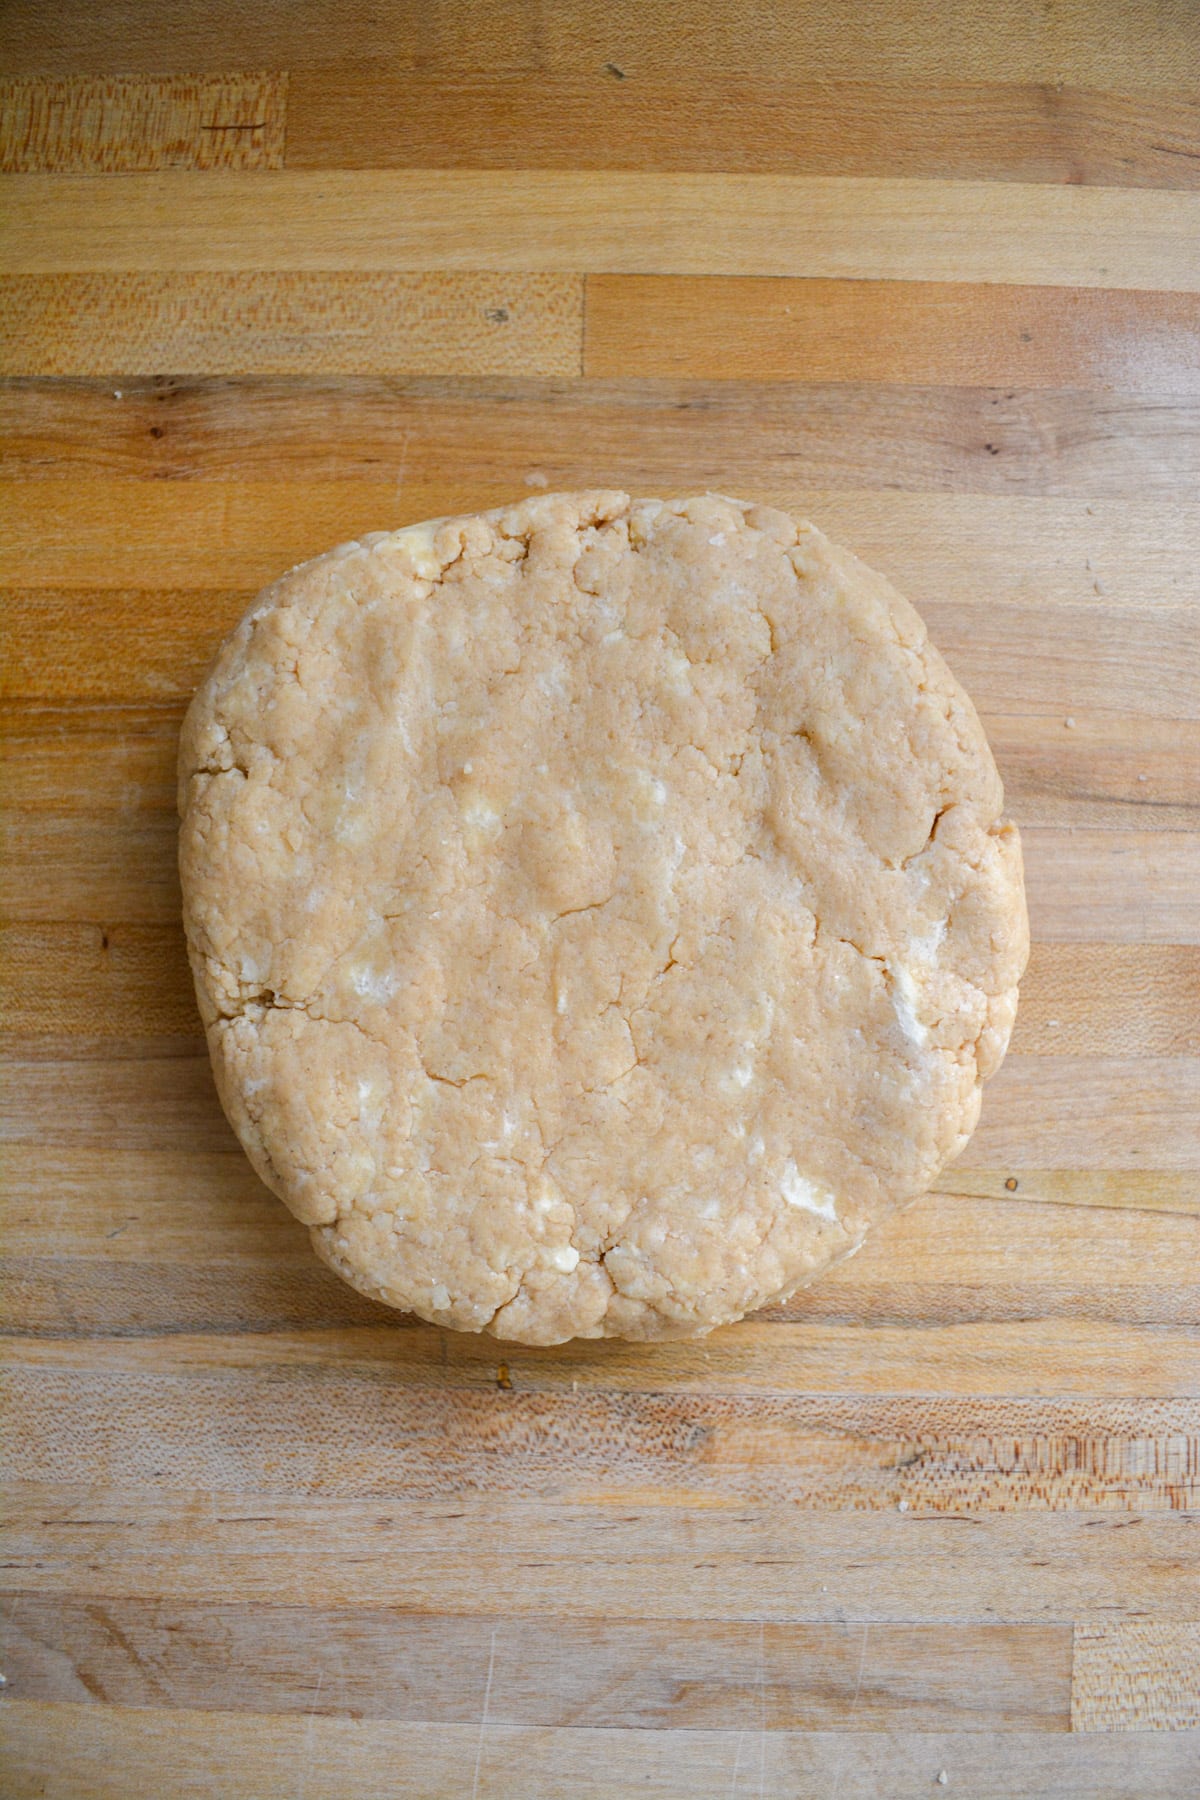 Dough pressed into a six inch diameter circle.